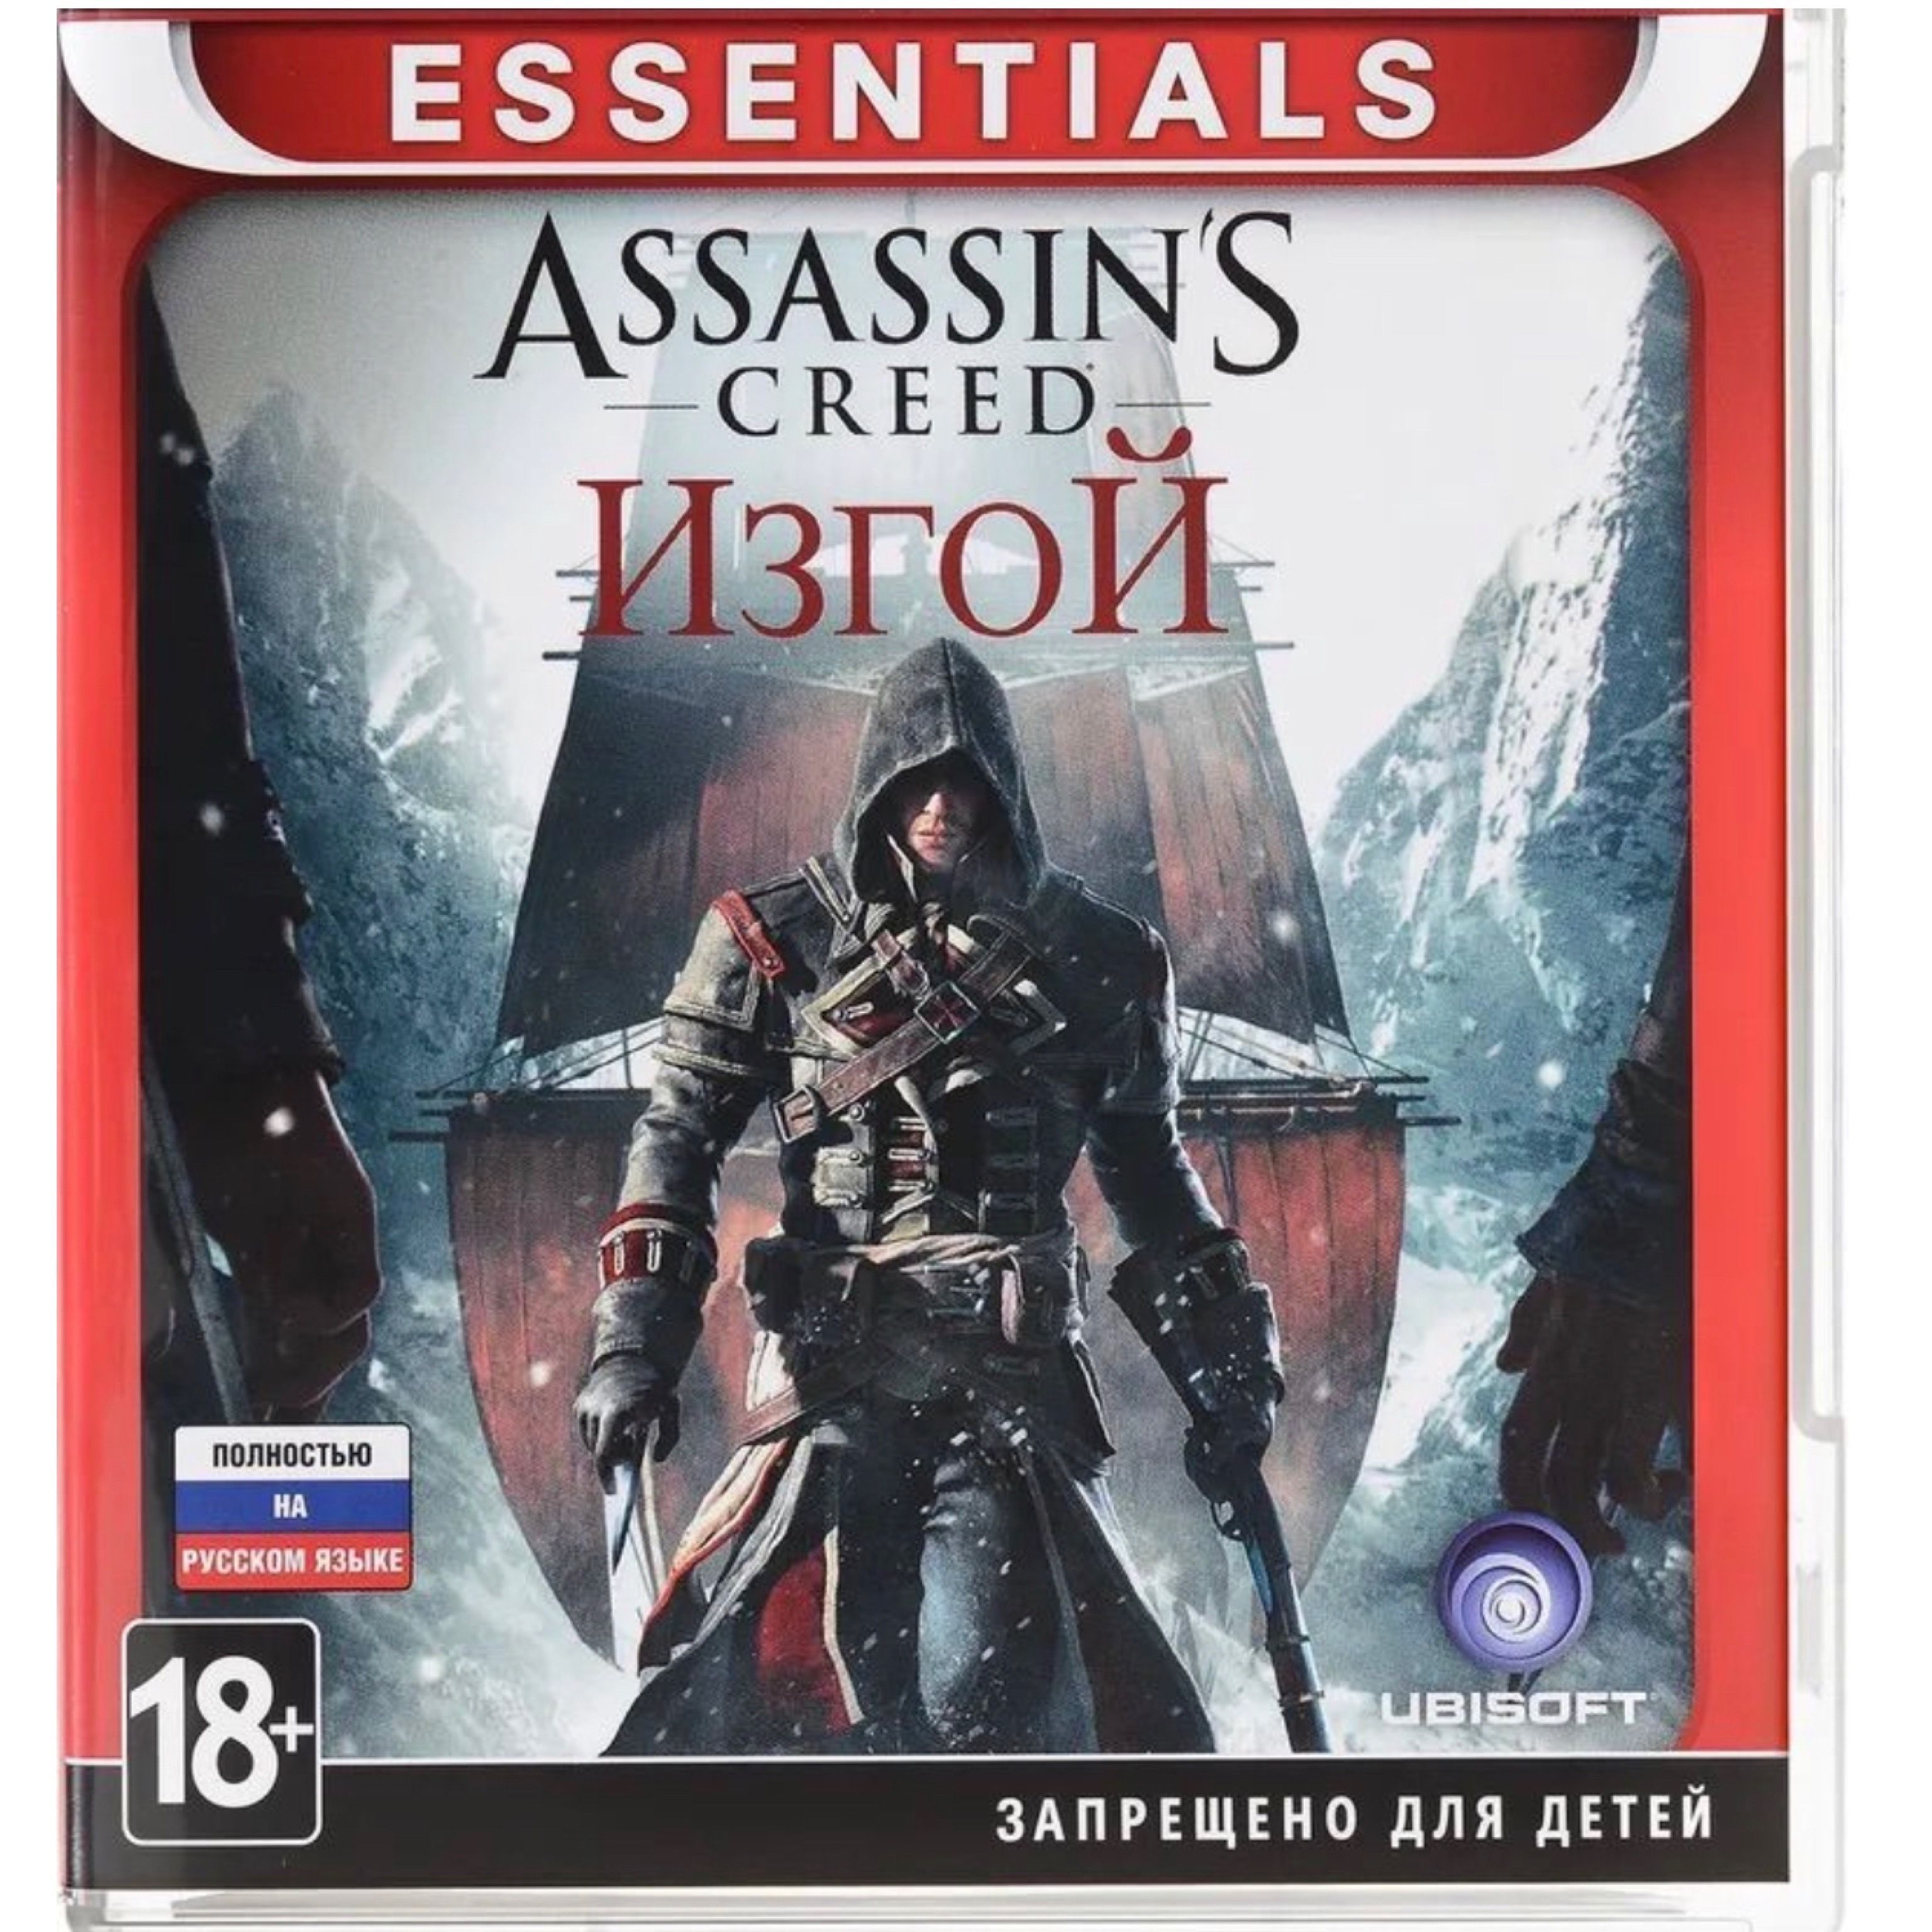 Ассасин на пс5. Диски на плейстейшен 3 ассасин Крид. Игры на PLAYSTATION 3 Assassins Creed. Игра для ps3 Assassin's Creed (Essentials) обложка.